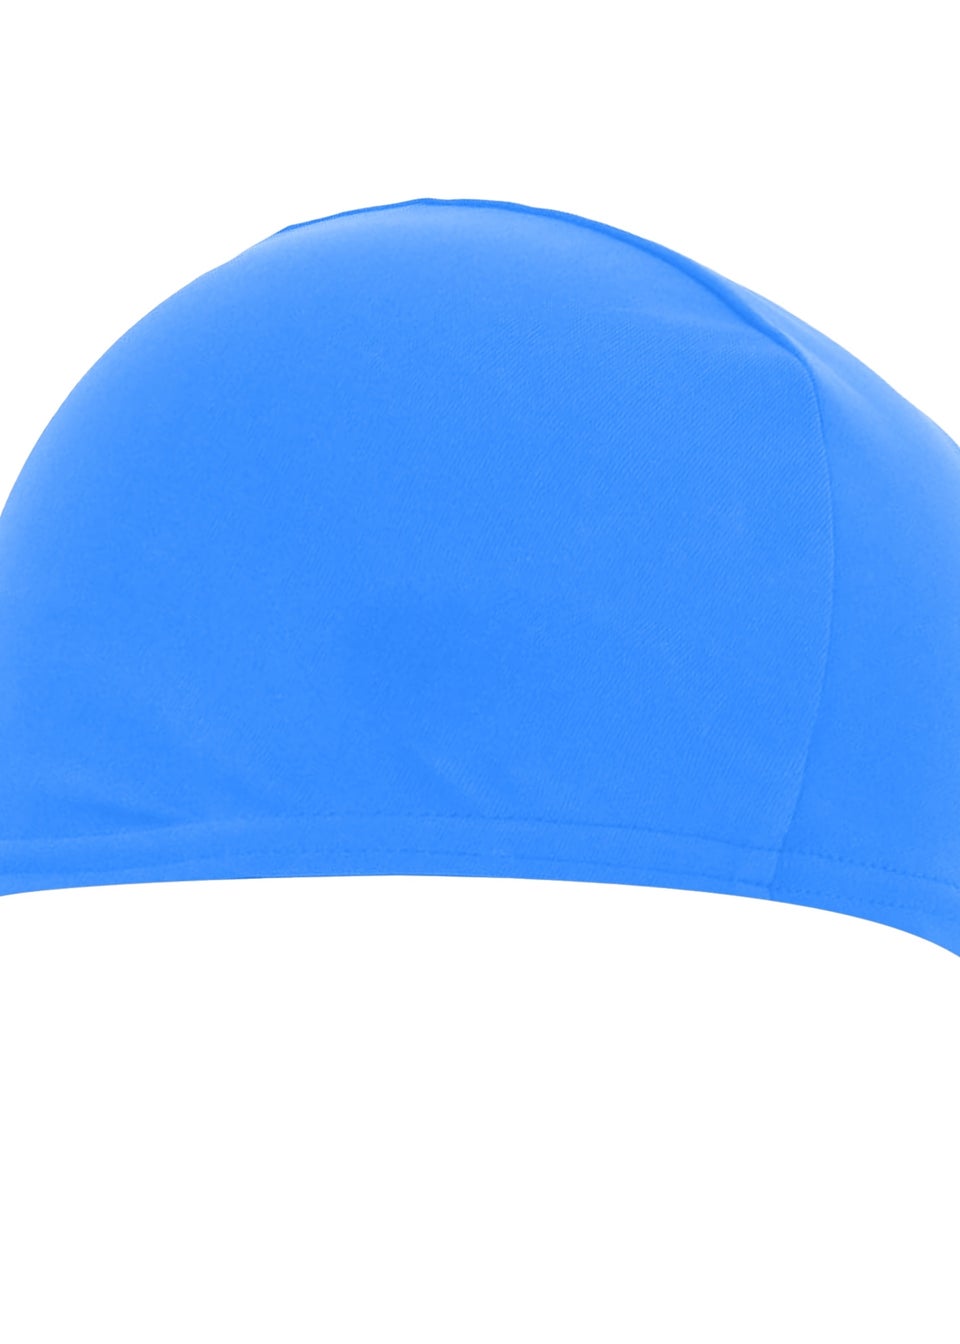 Speedo Kids Blue Polyester Swim Cap